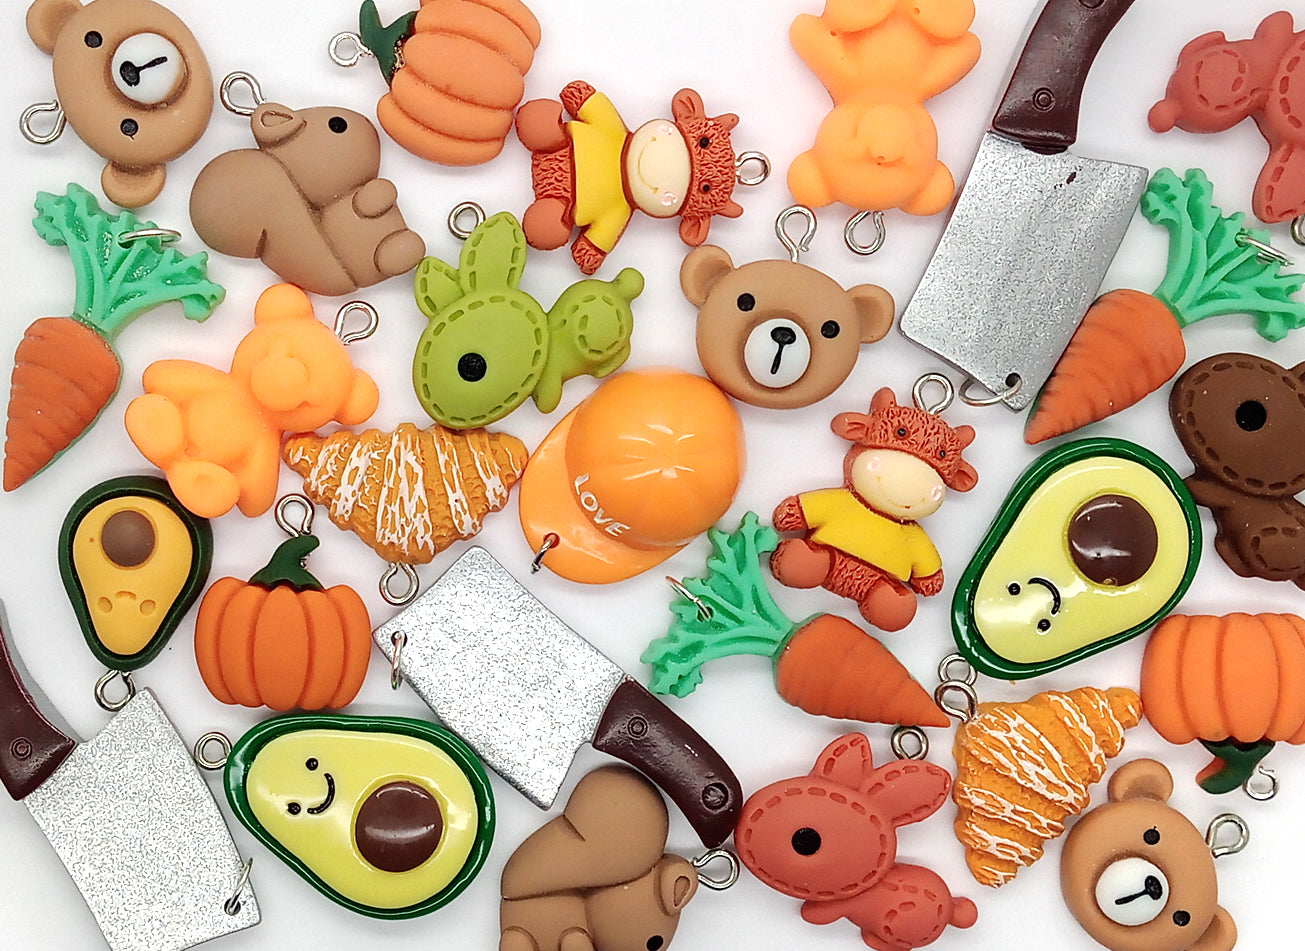 Charm Mix in Fall Colors: Bears, Squirrels & Pumpkins